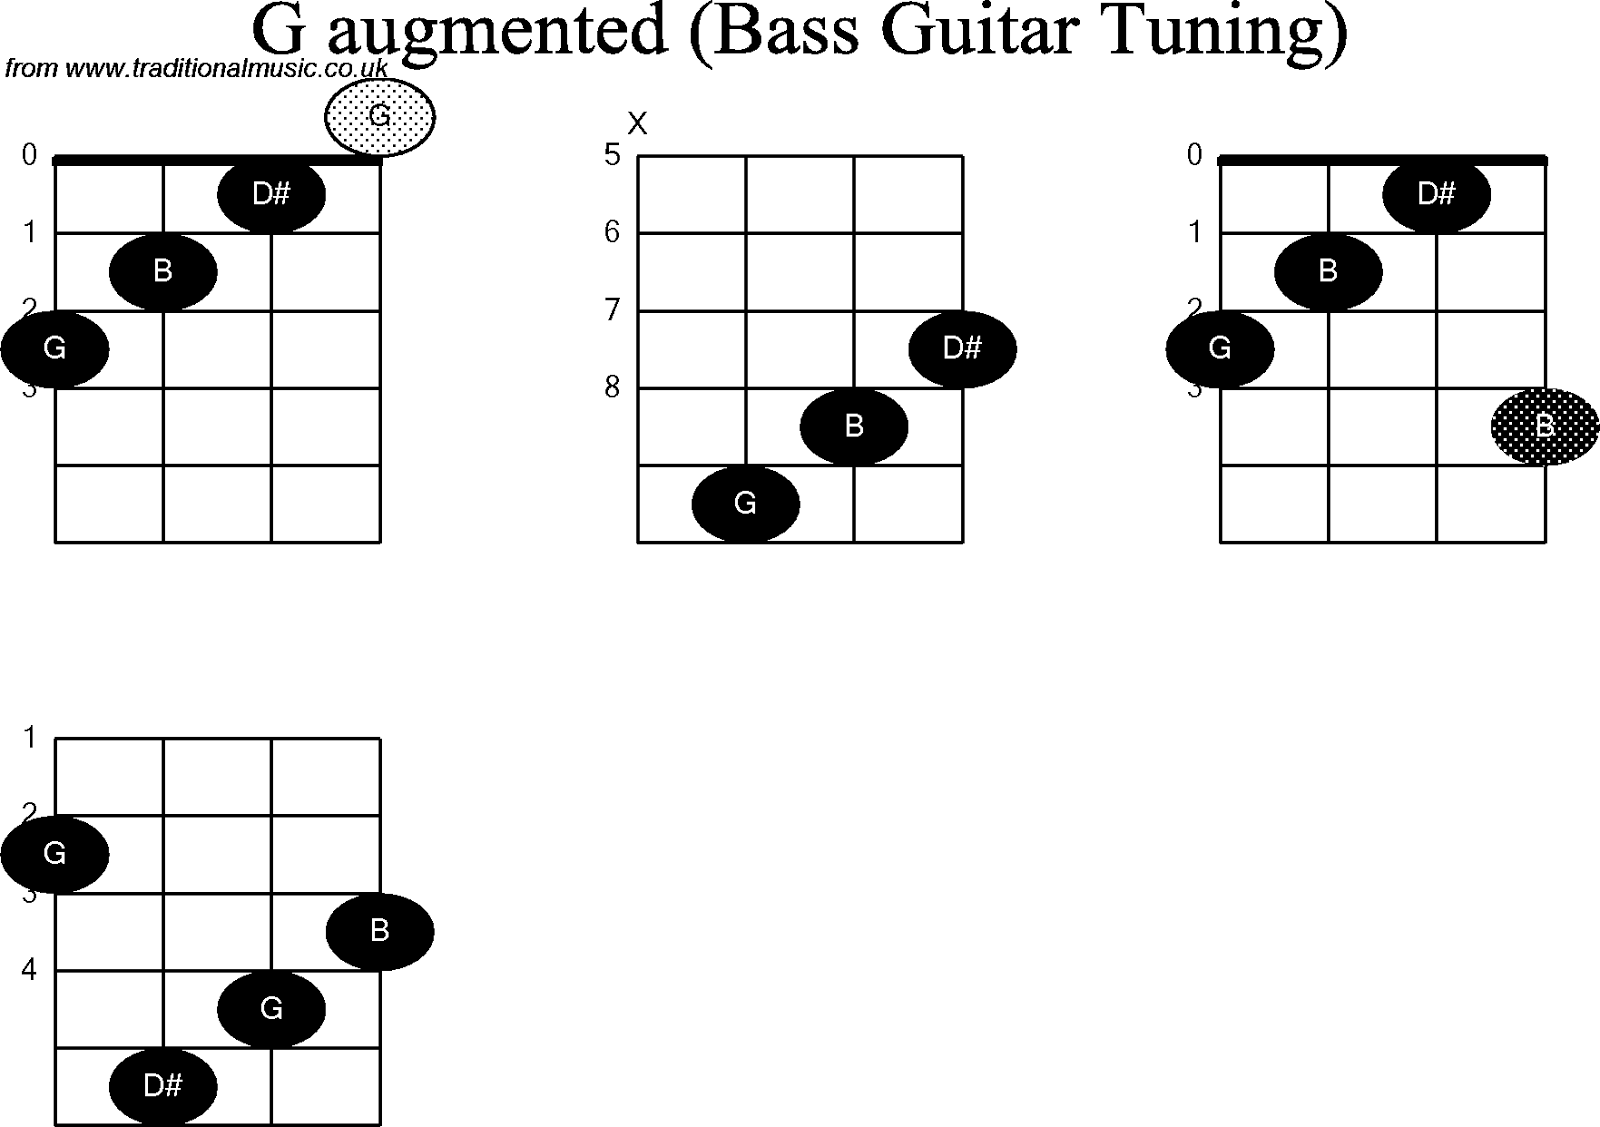 Gambar kunci gitar bass chords lengkap.